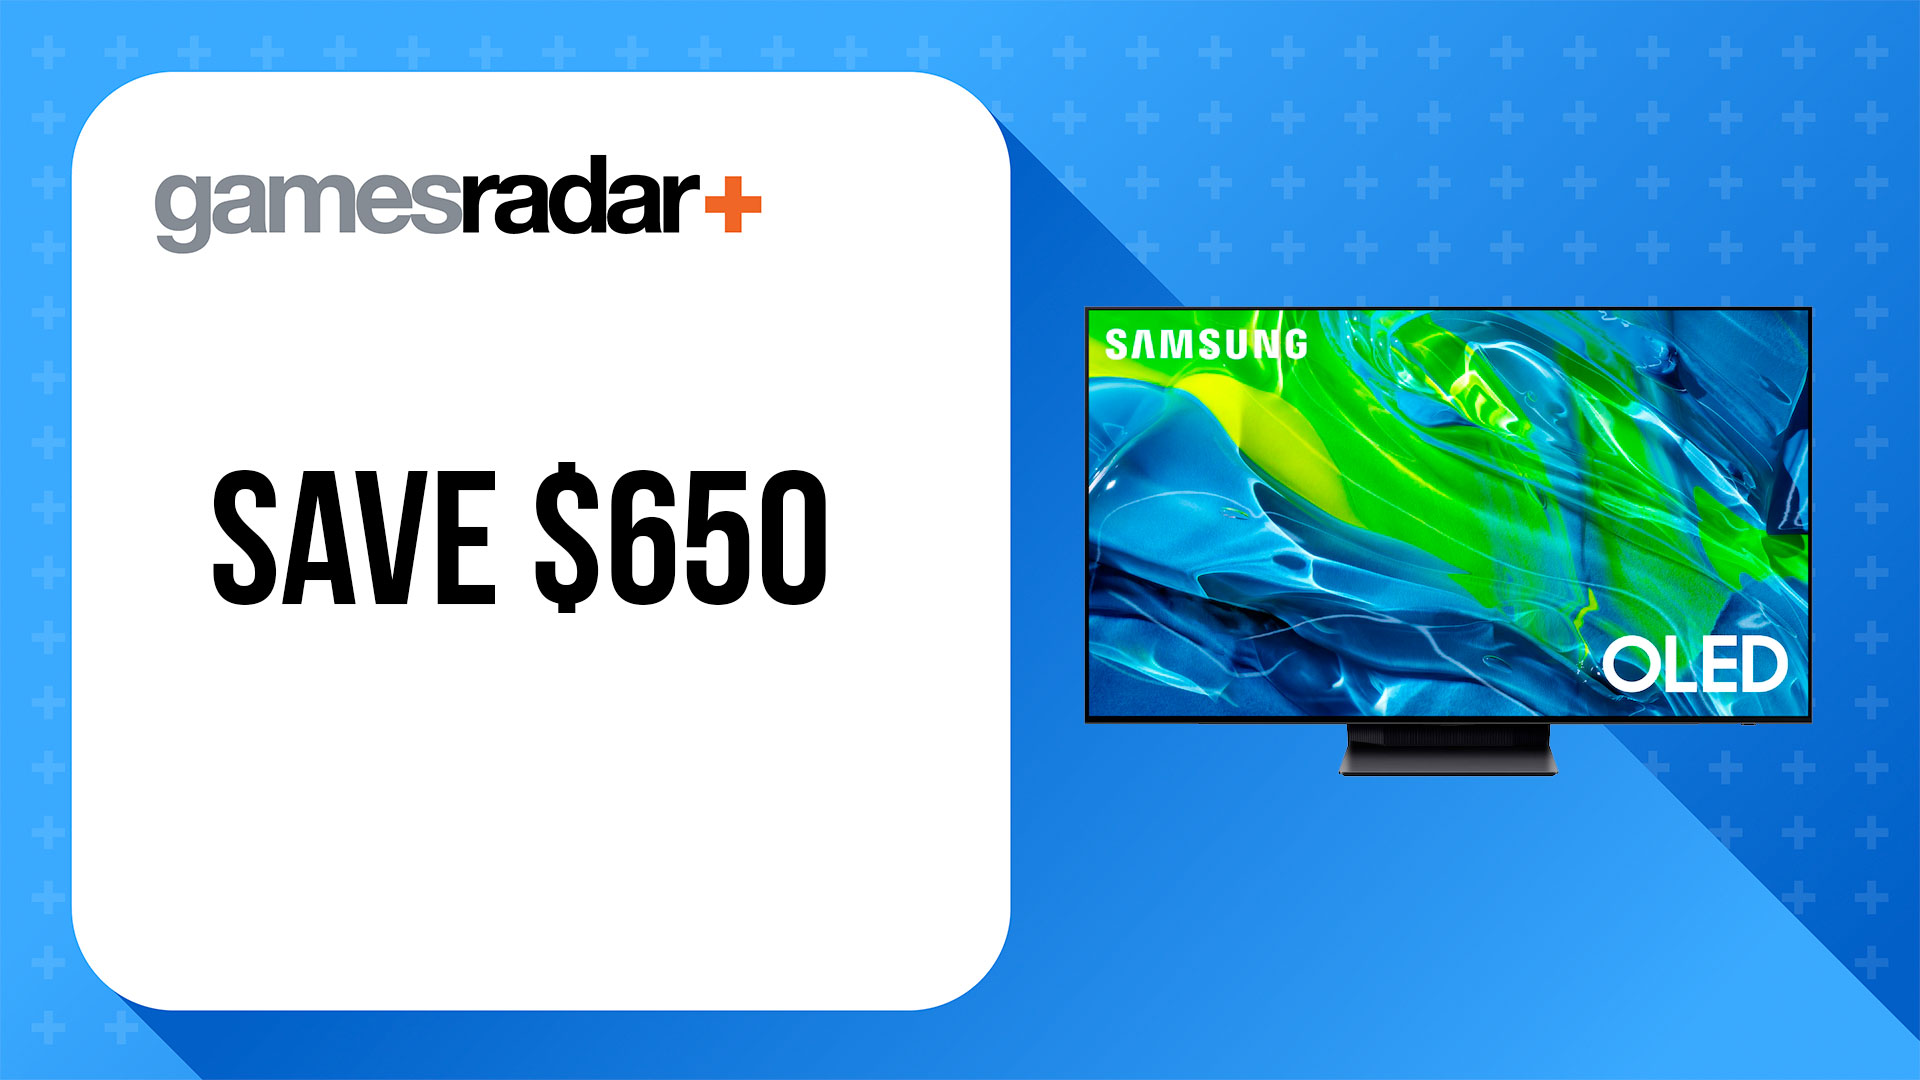 Samsung S95B TV deal - Save $650